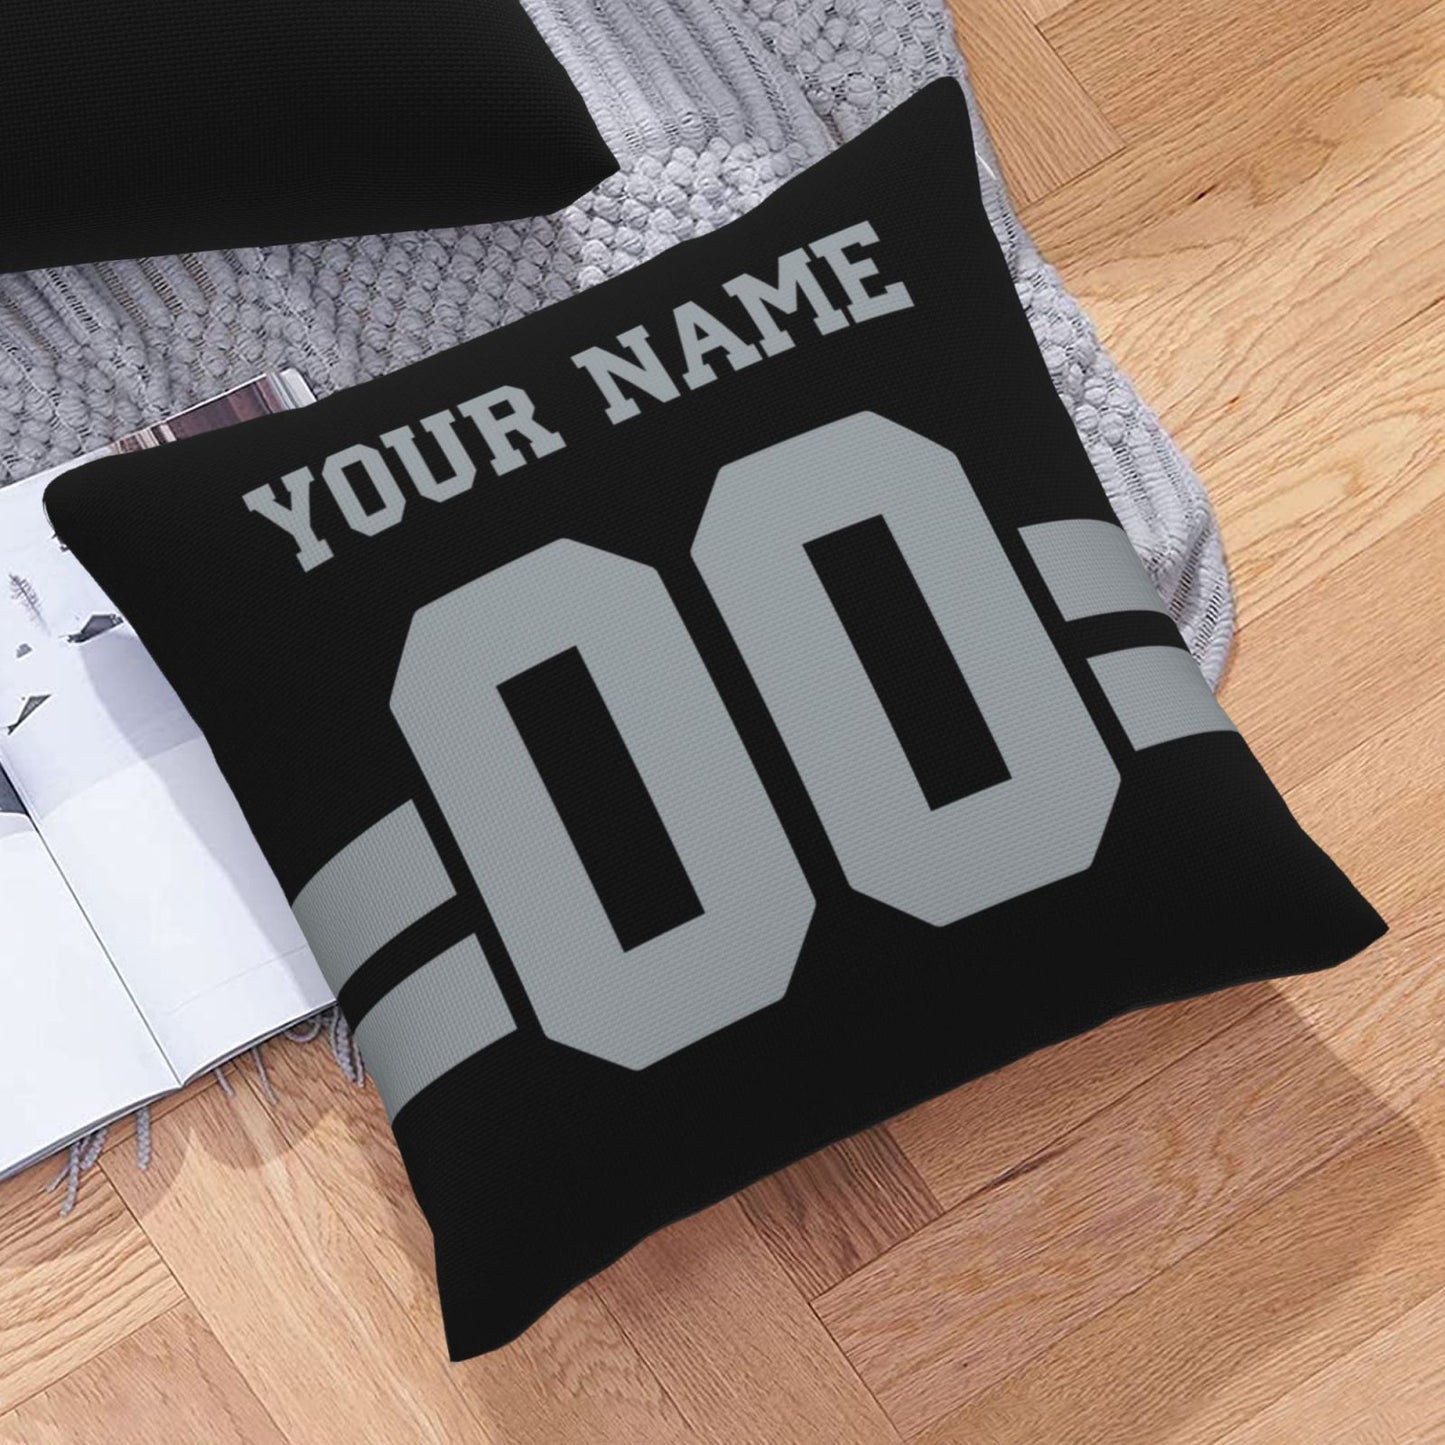 Custom Black Las Vegas Raiders Decorative Throw Pillow Case - Print Personalized Football Team Fans Name & Number Birthday Gift